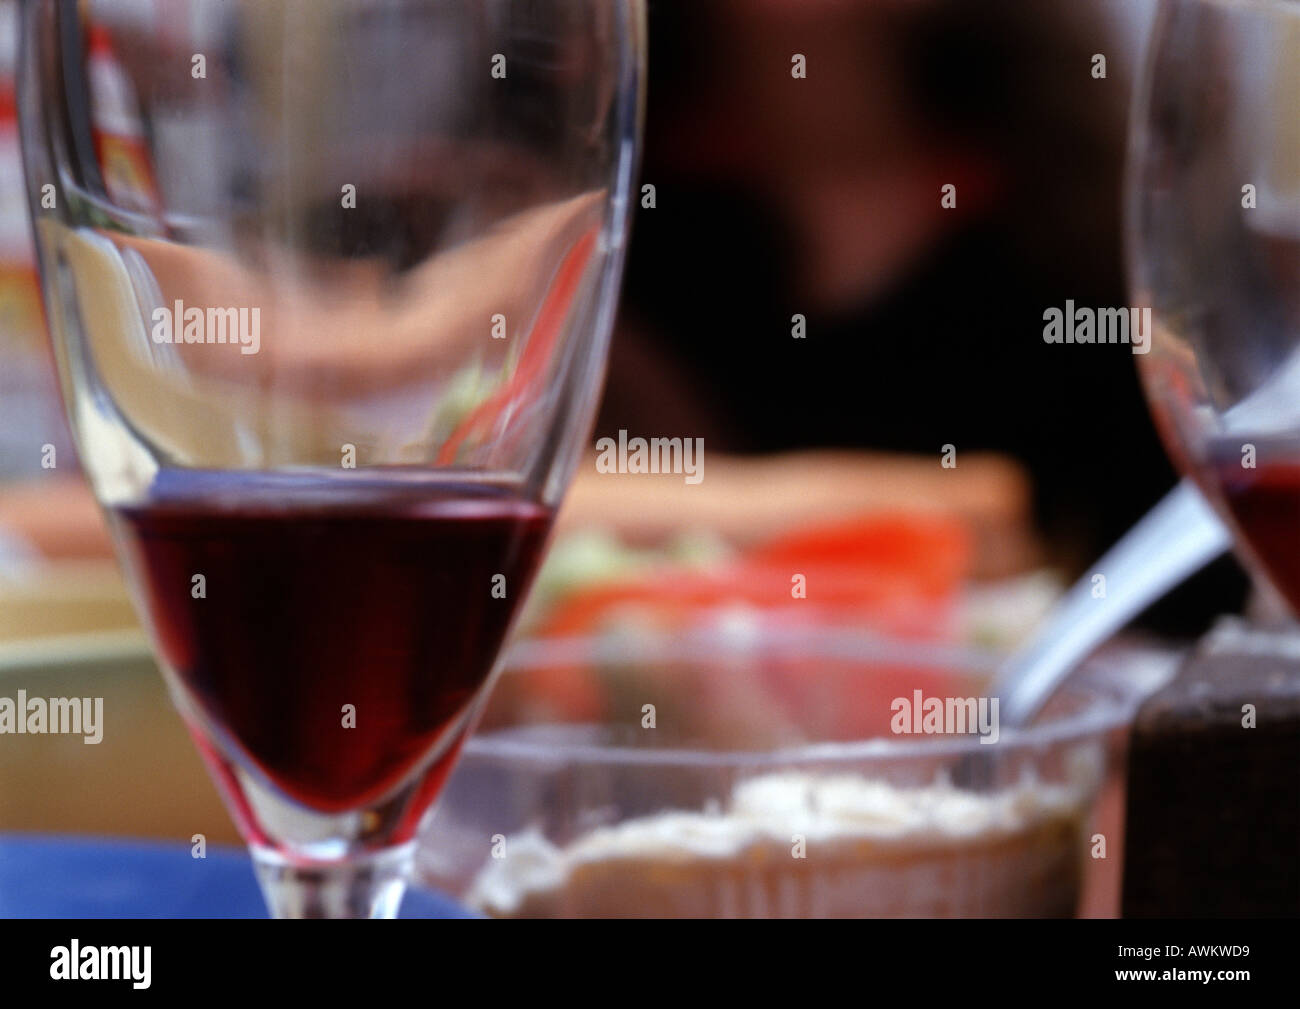 Glass of wine, close-up Stock Photo